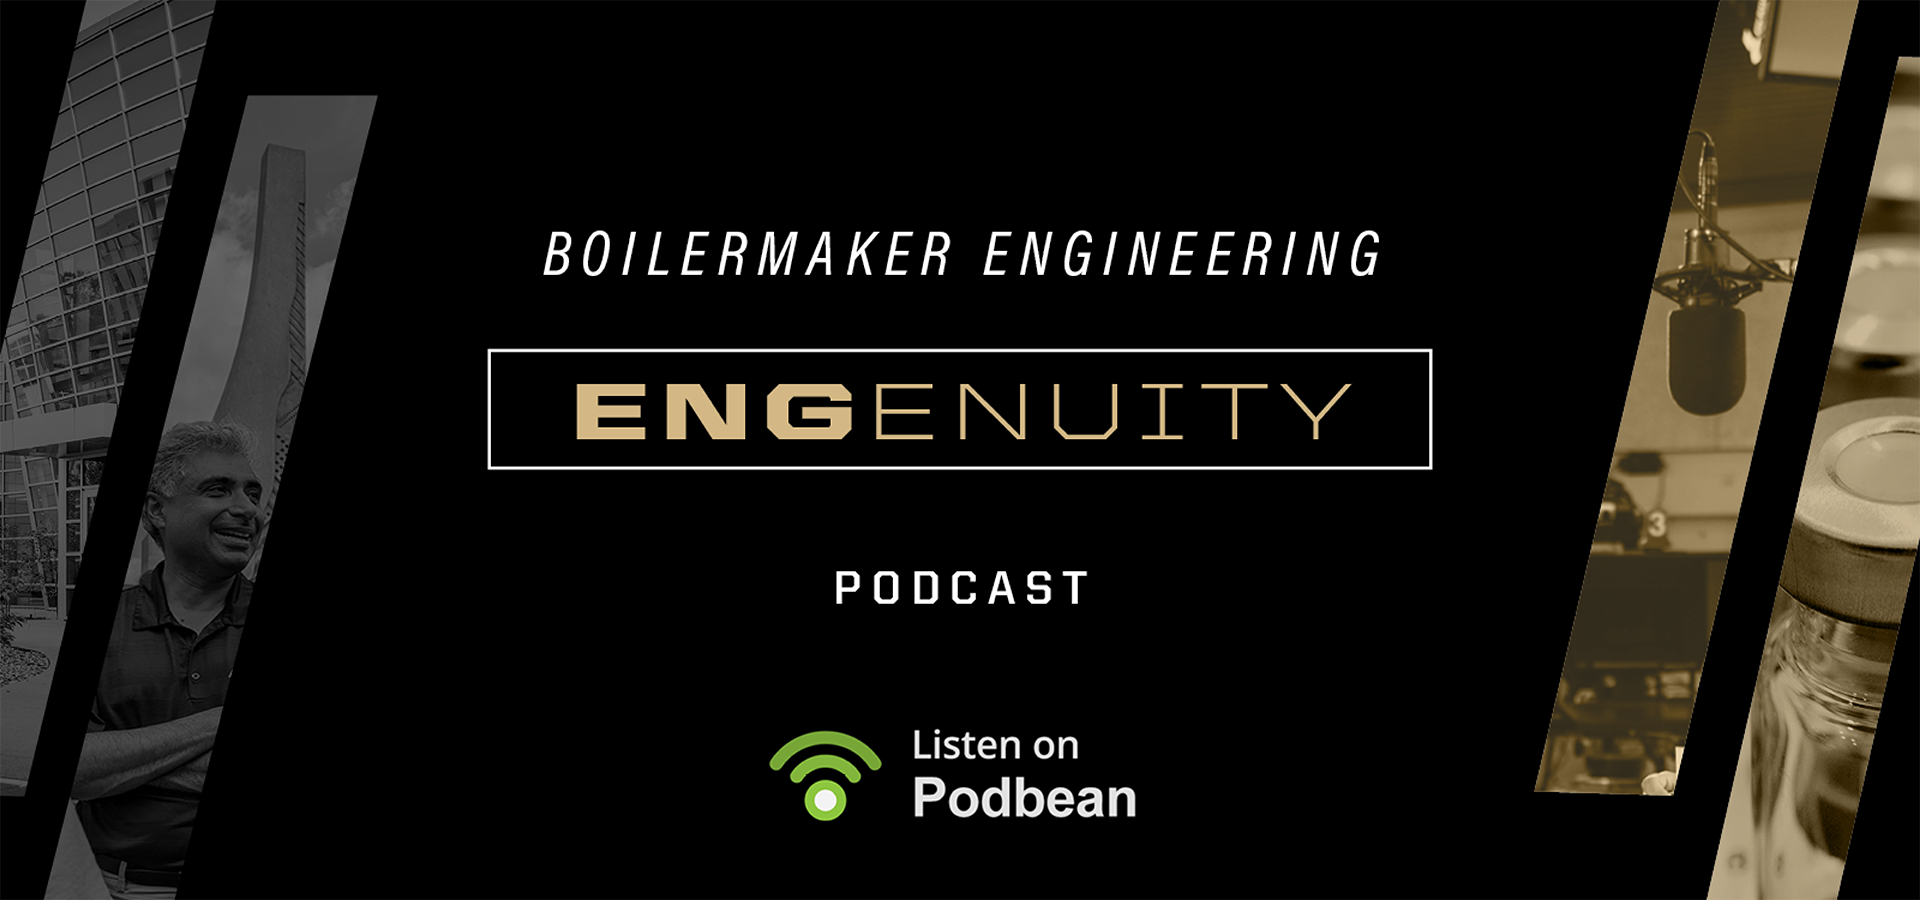 Image of title screen for Boilermaker Engineering Engenuity podcast. Listen on Podbean.